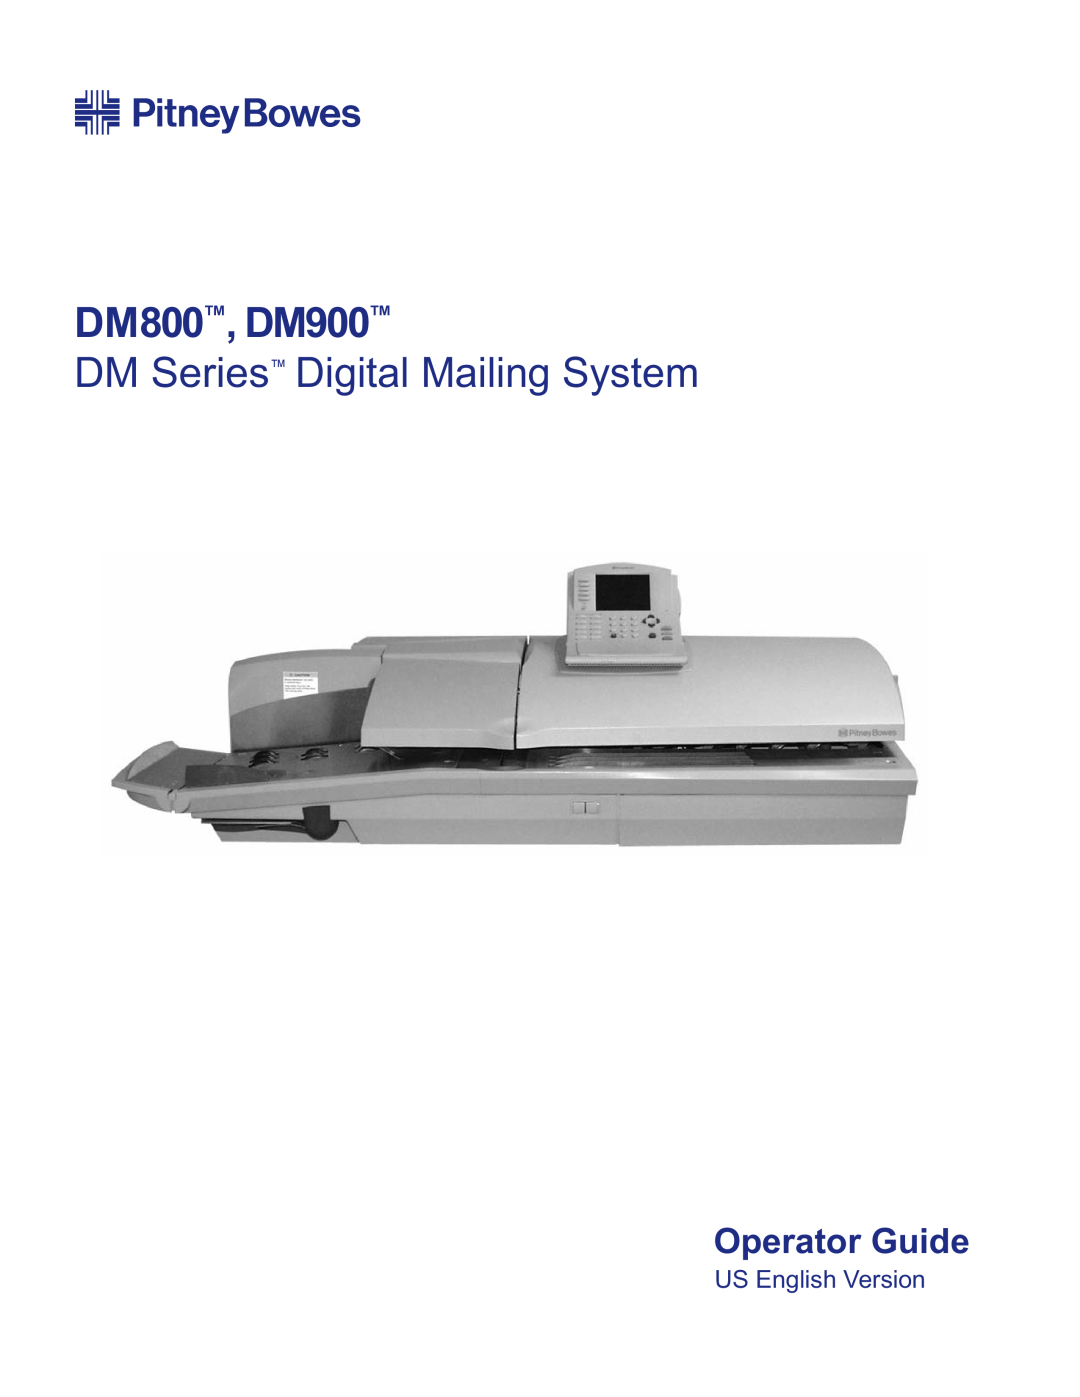 Pitney Bowes manual DM800, DM900, DM Series Digital Mailing System, Operator Guide, US English Version 